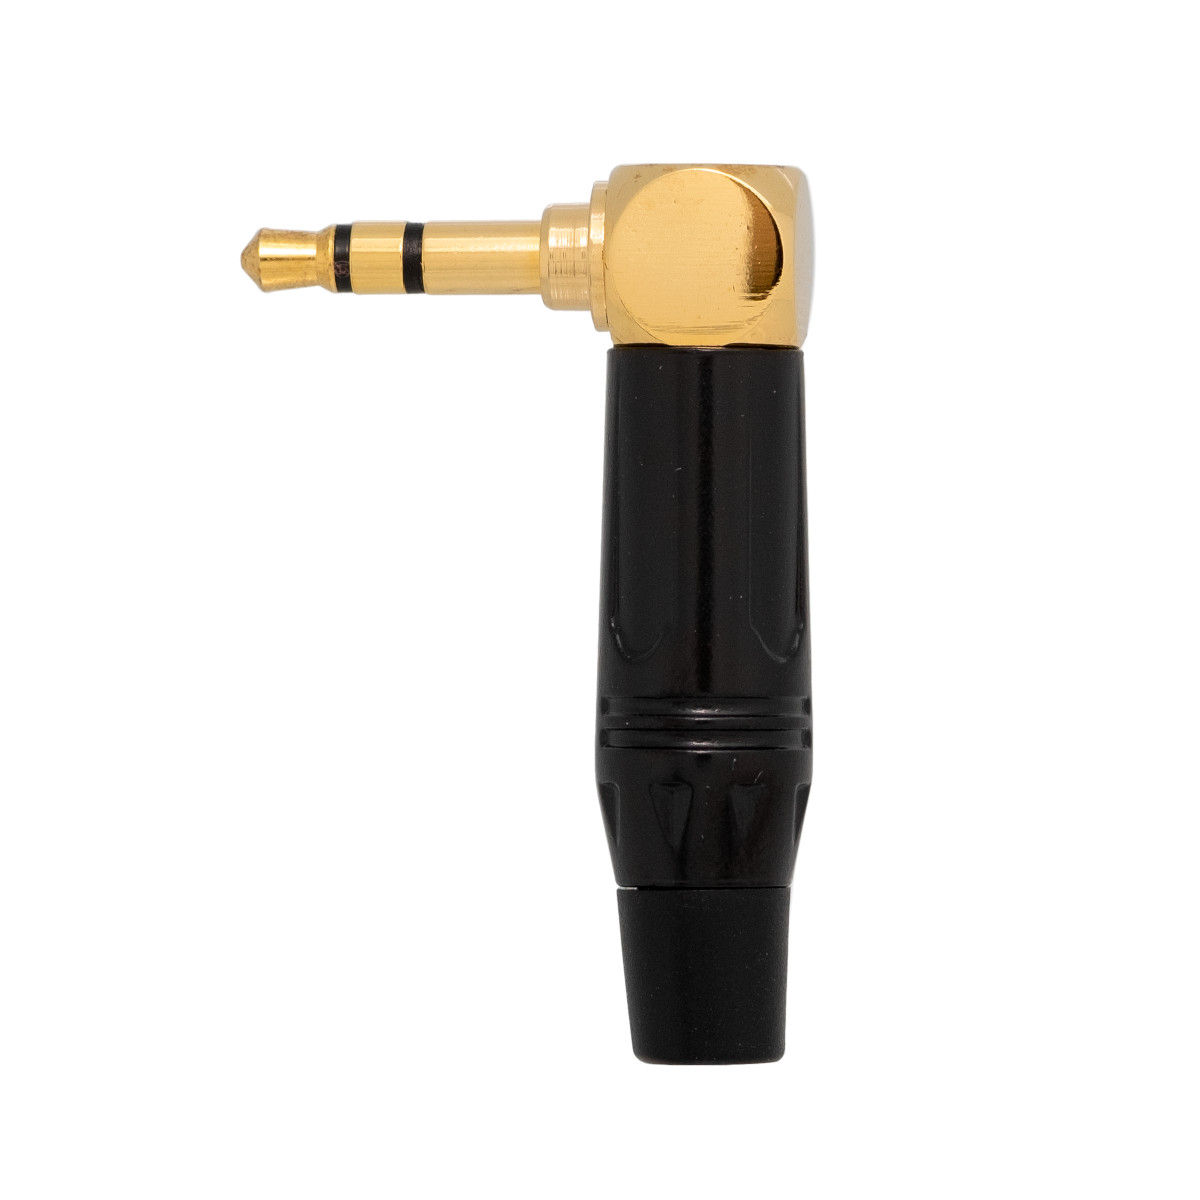 Jack connector 3.5mm 3cont. elbowed gold - black sleeve